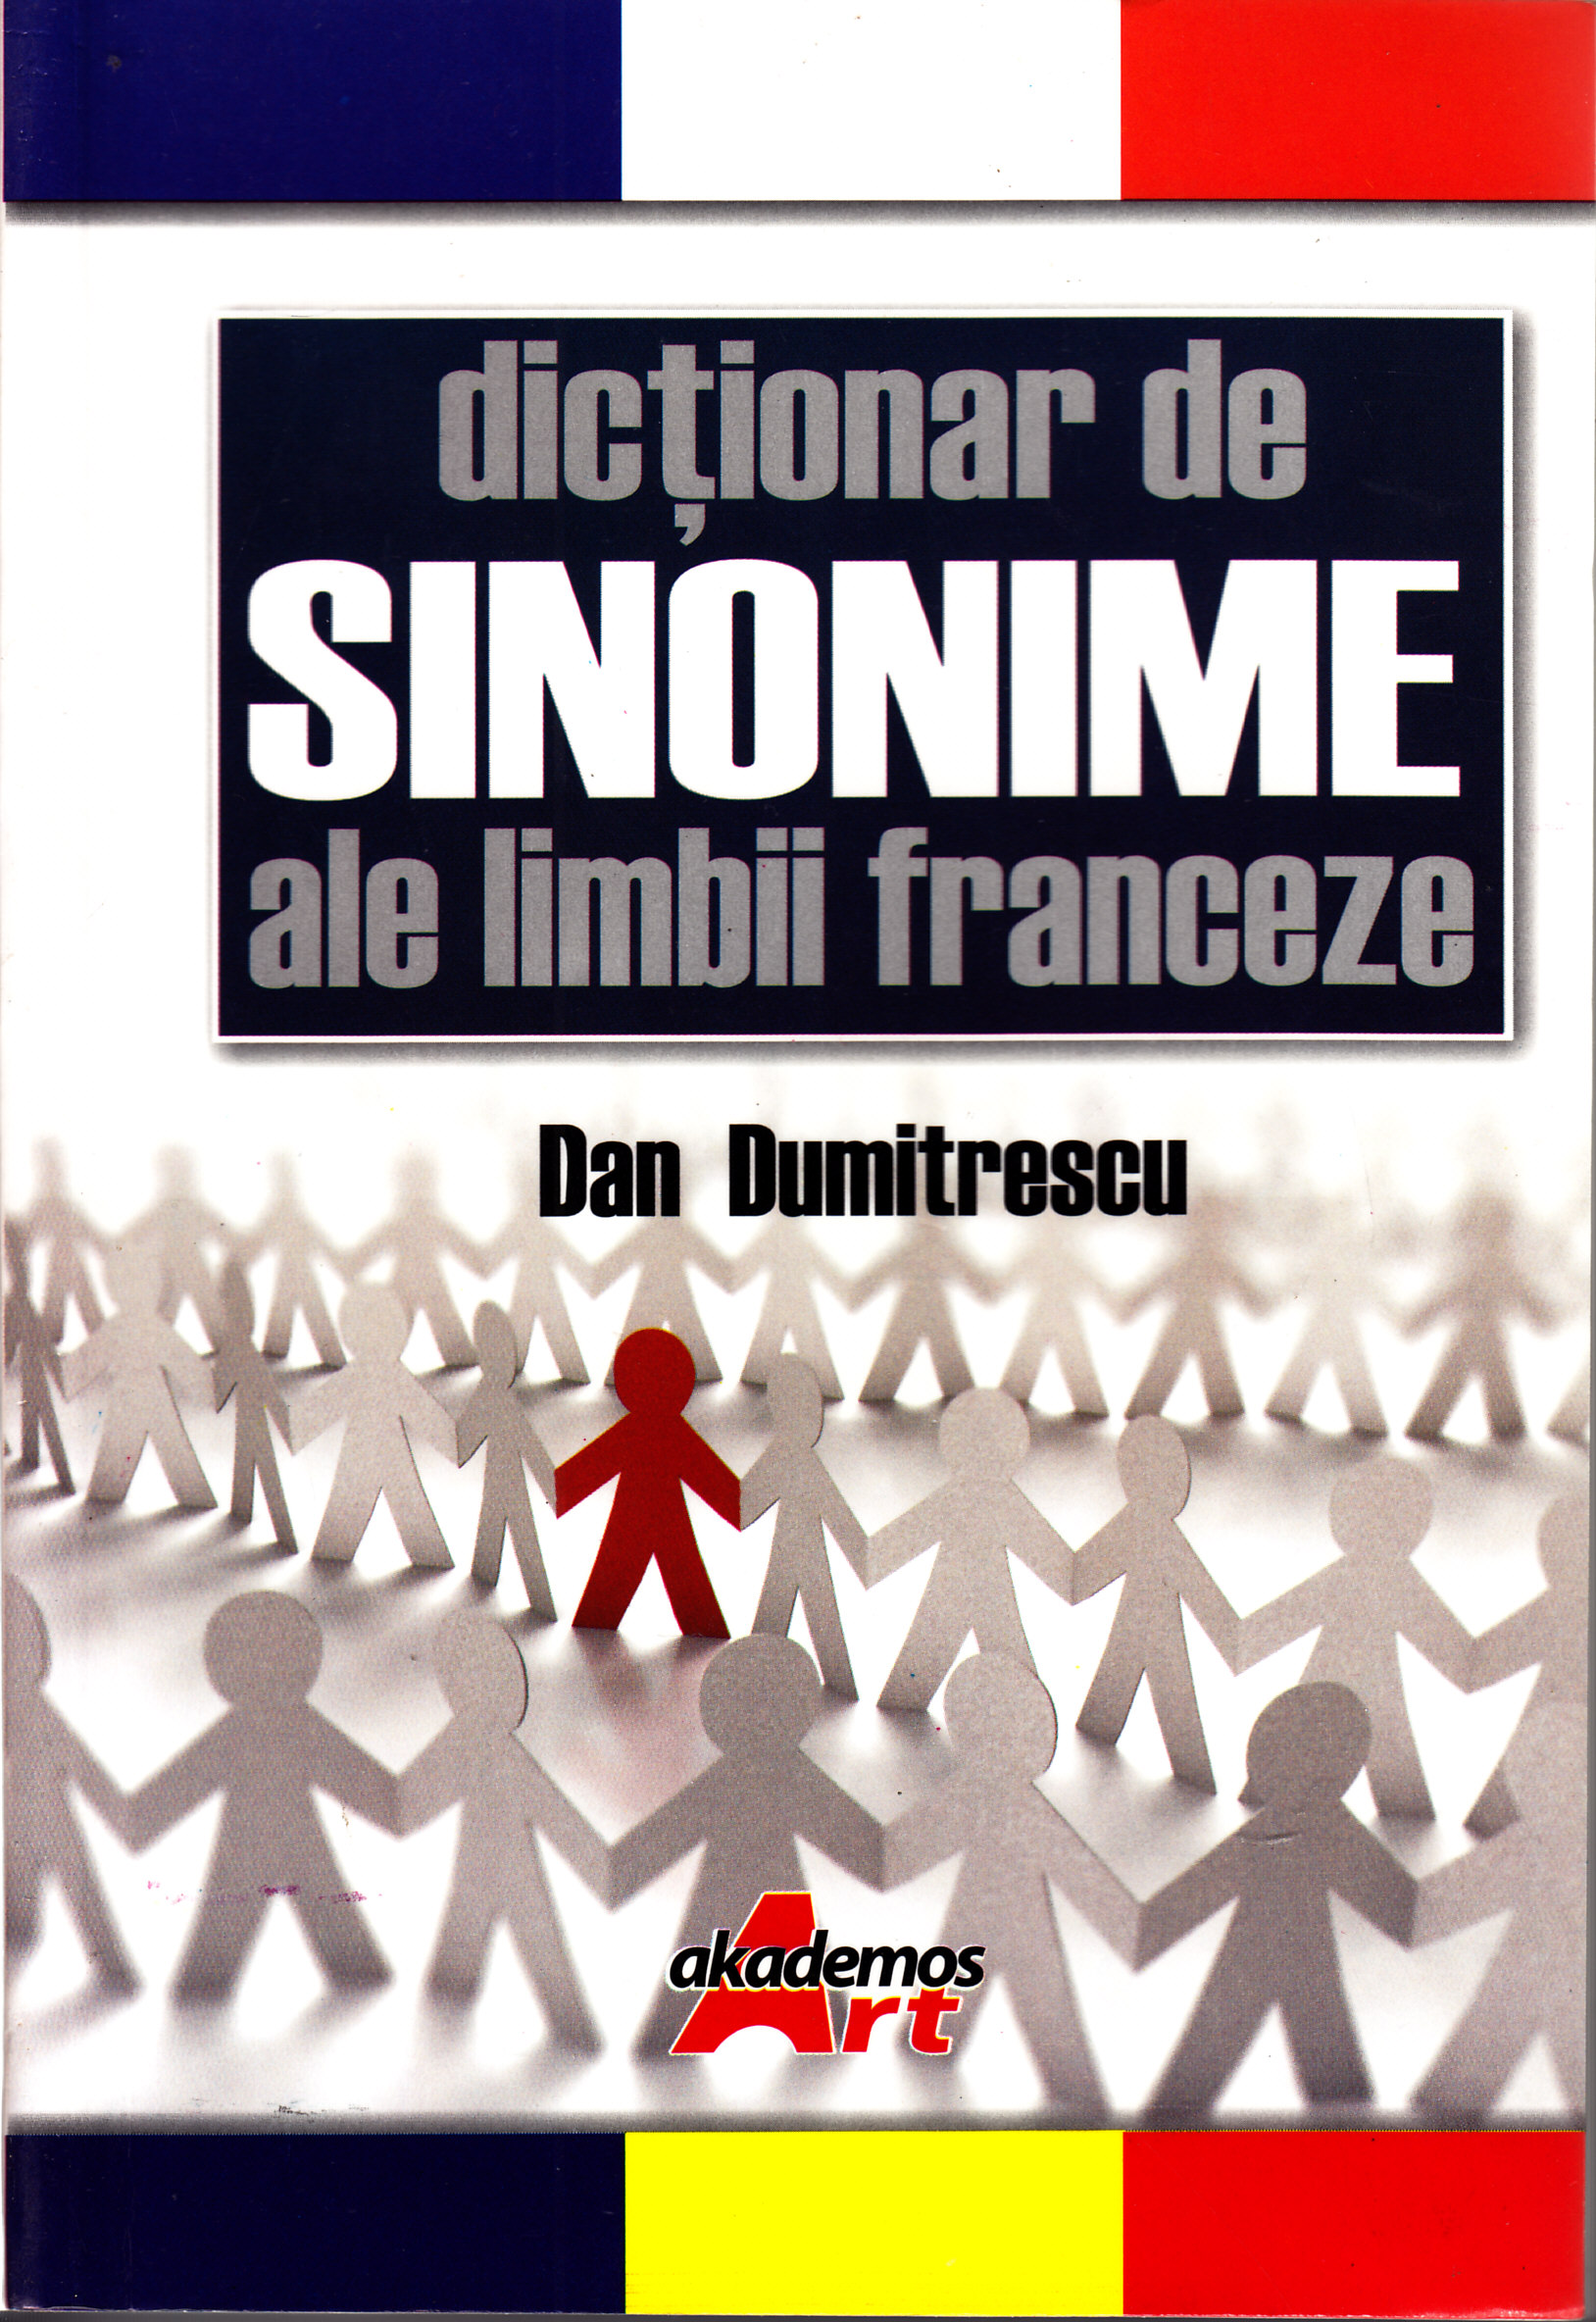 Dictionar desinonime ale limbii franceze - Dan Dumitrescu